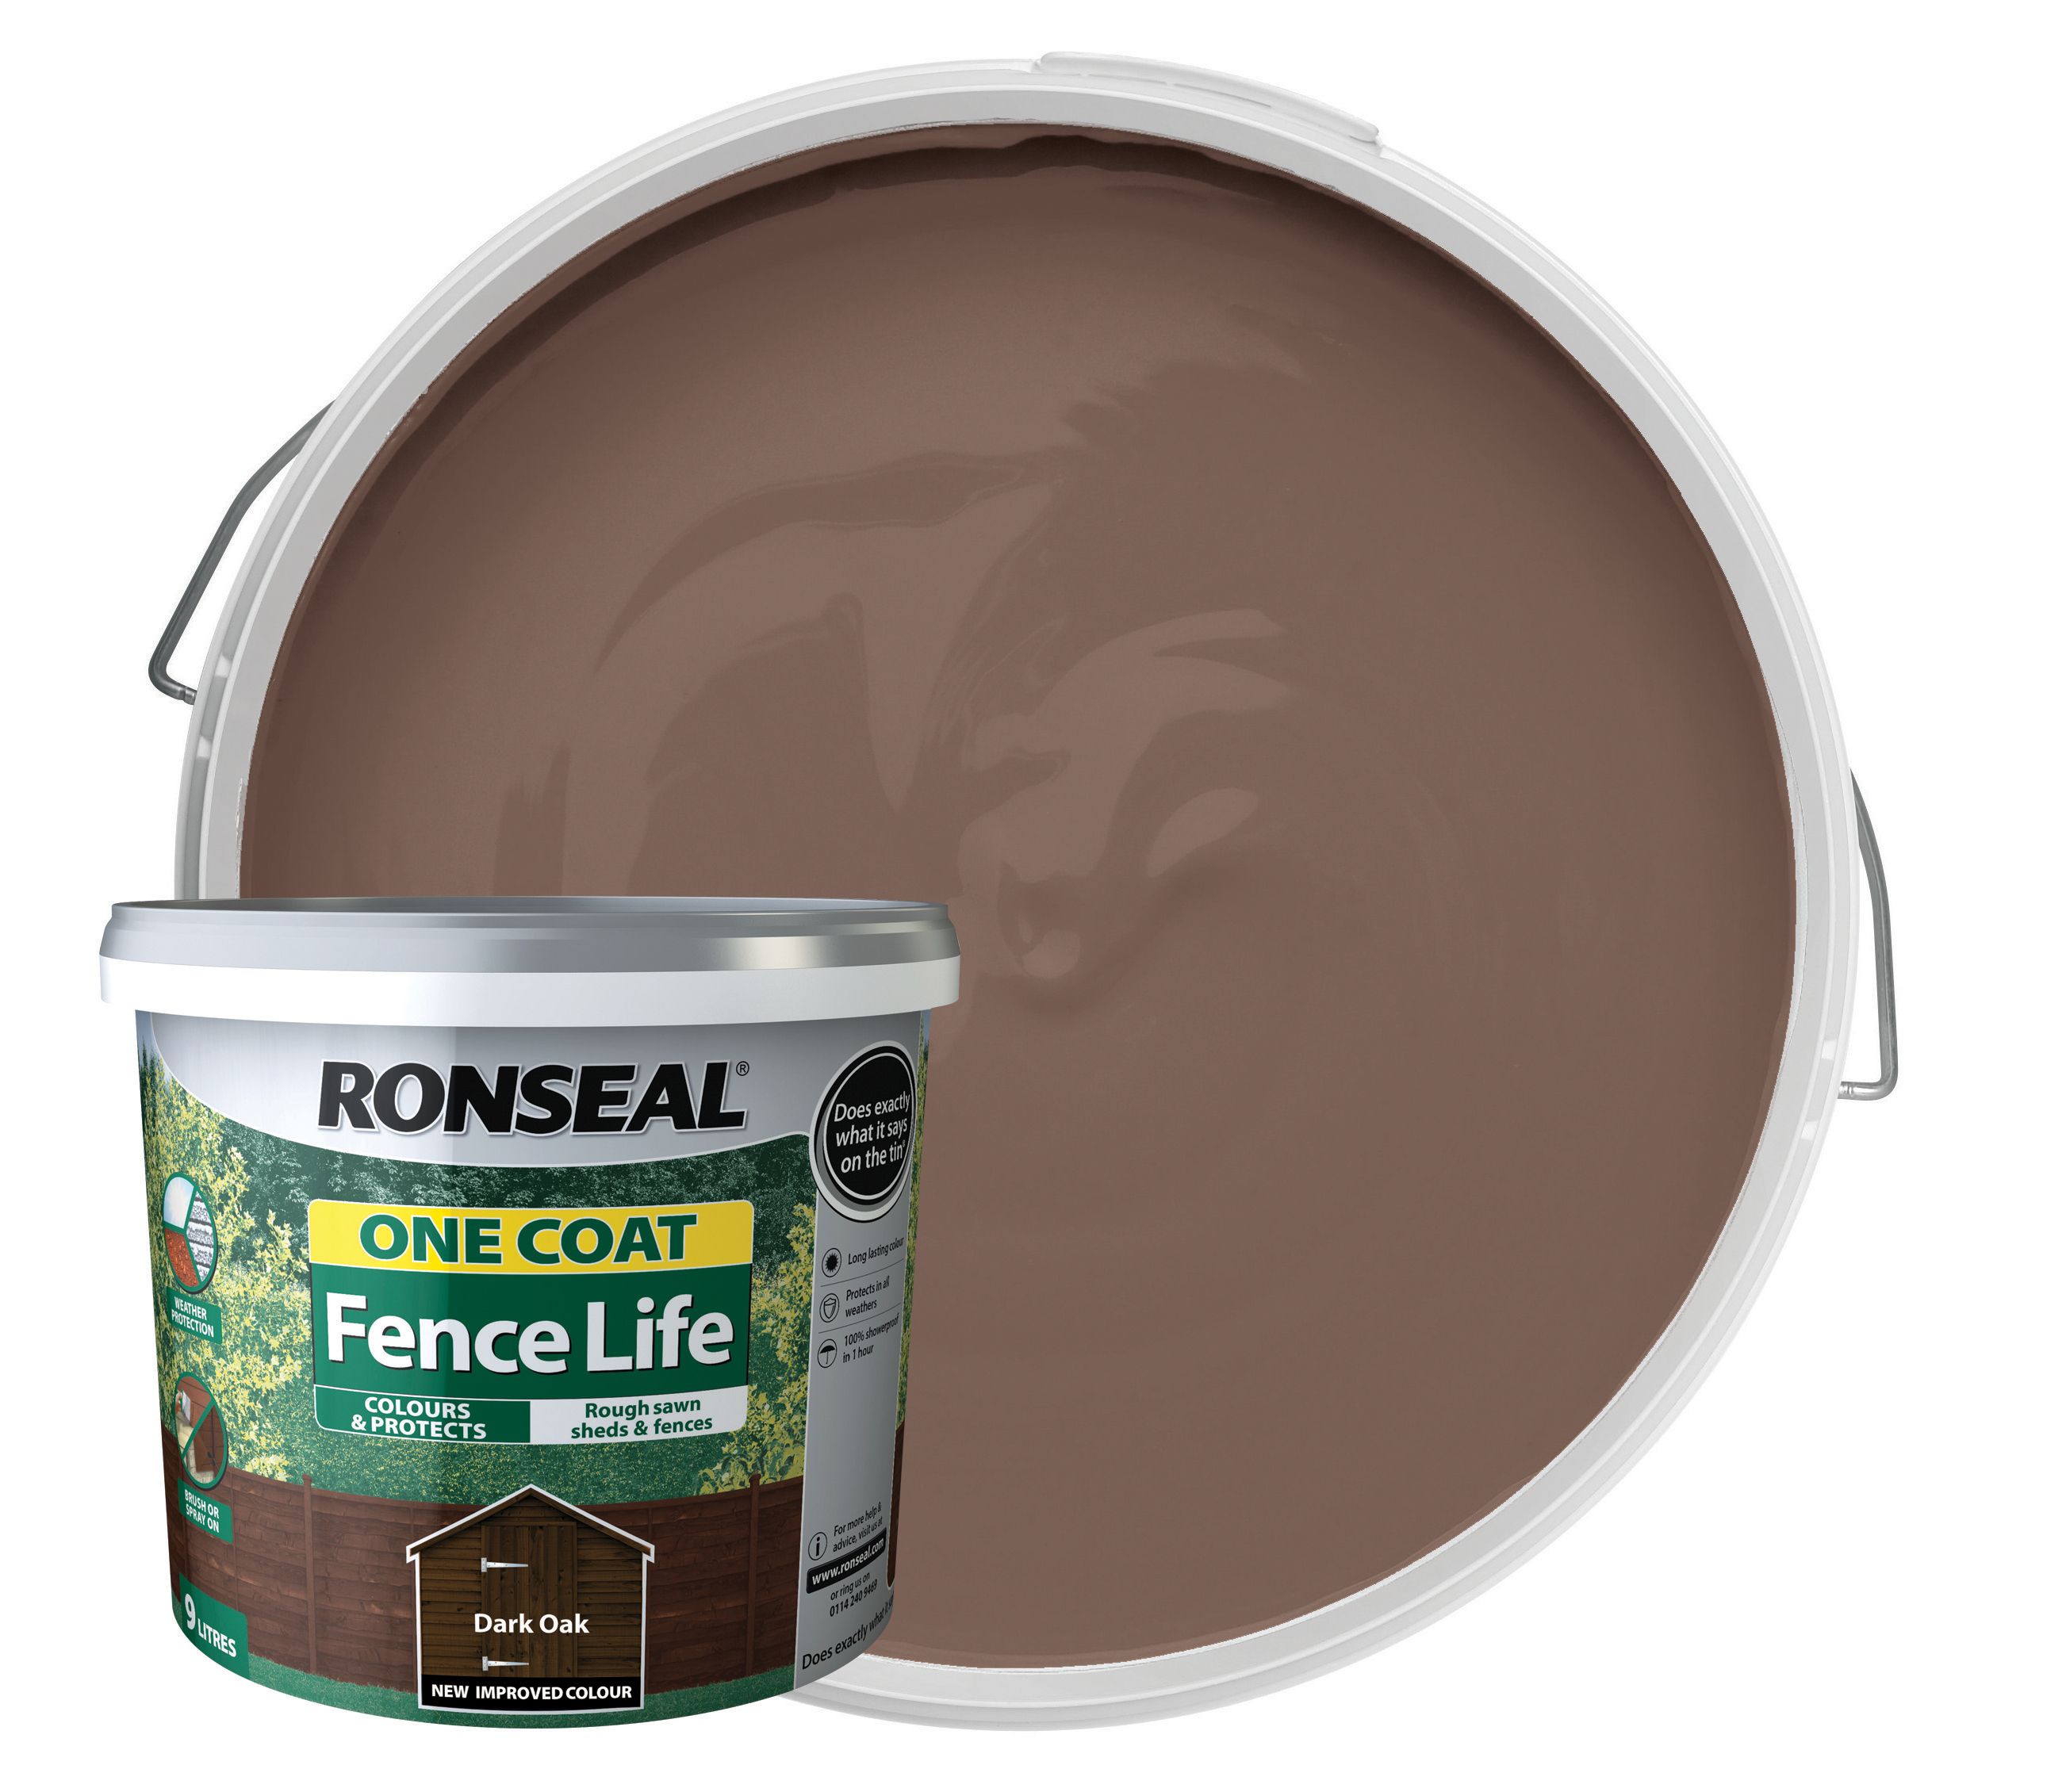 Ronseal One Coat Fence Life Matt Shed & Fence Treatment - Dark Oak - 9L